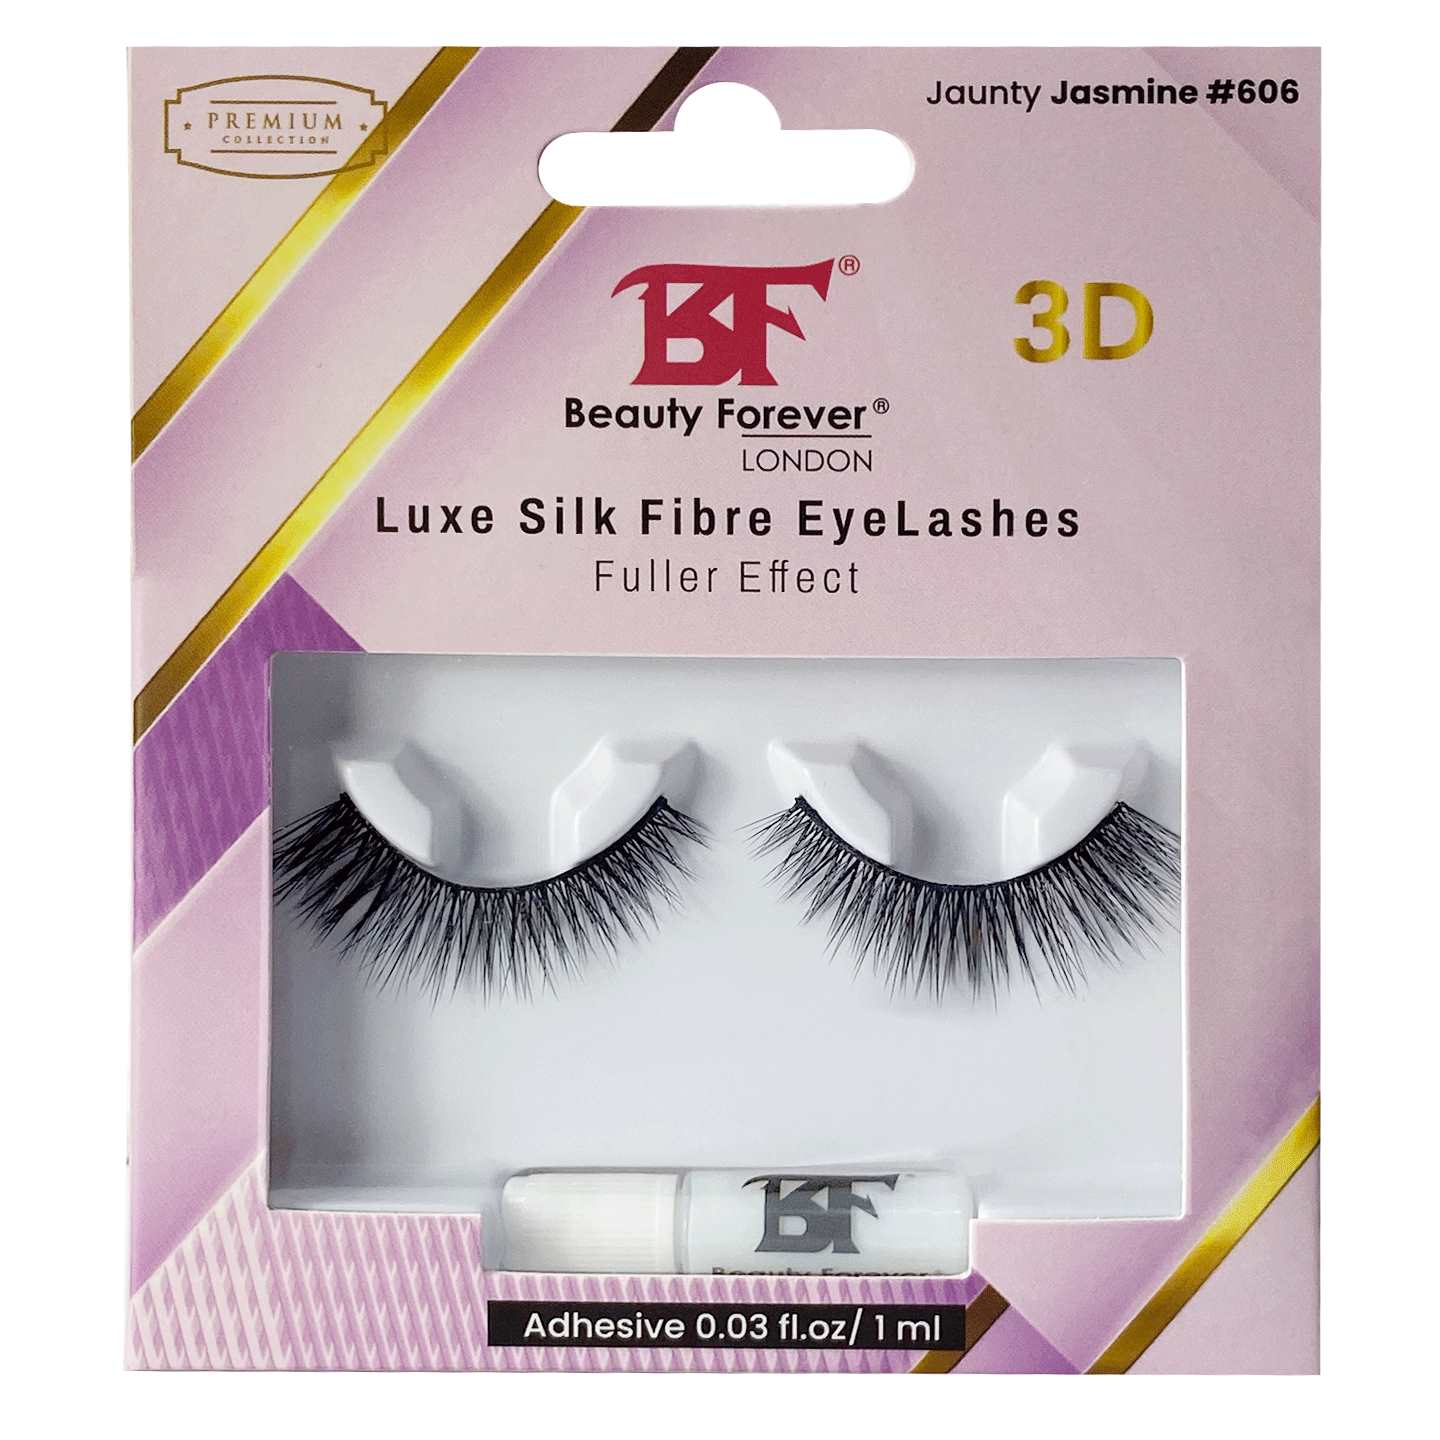 Beauty Forever Luxe Silk Fibre 3D Eyelashes in Jaunty Jasmine #606